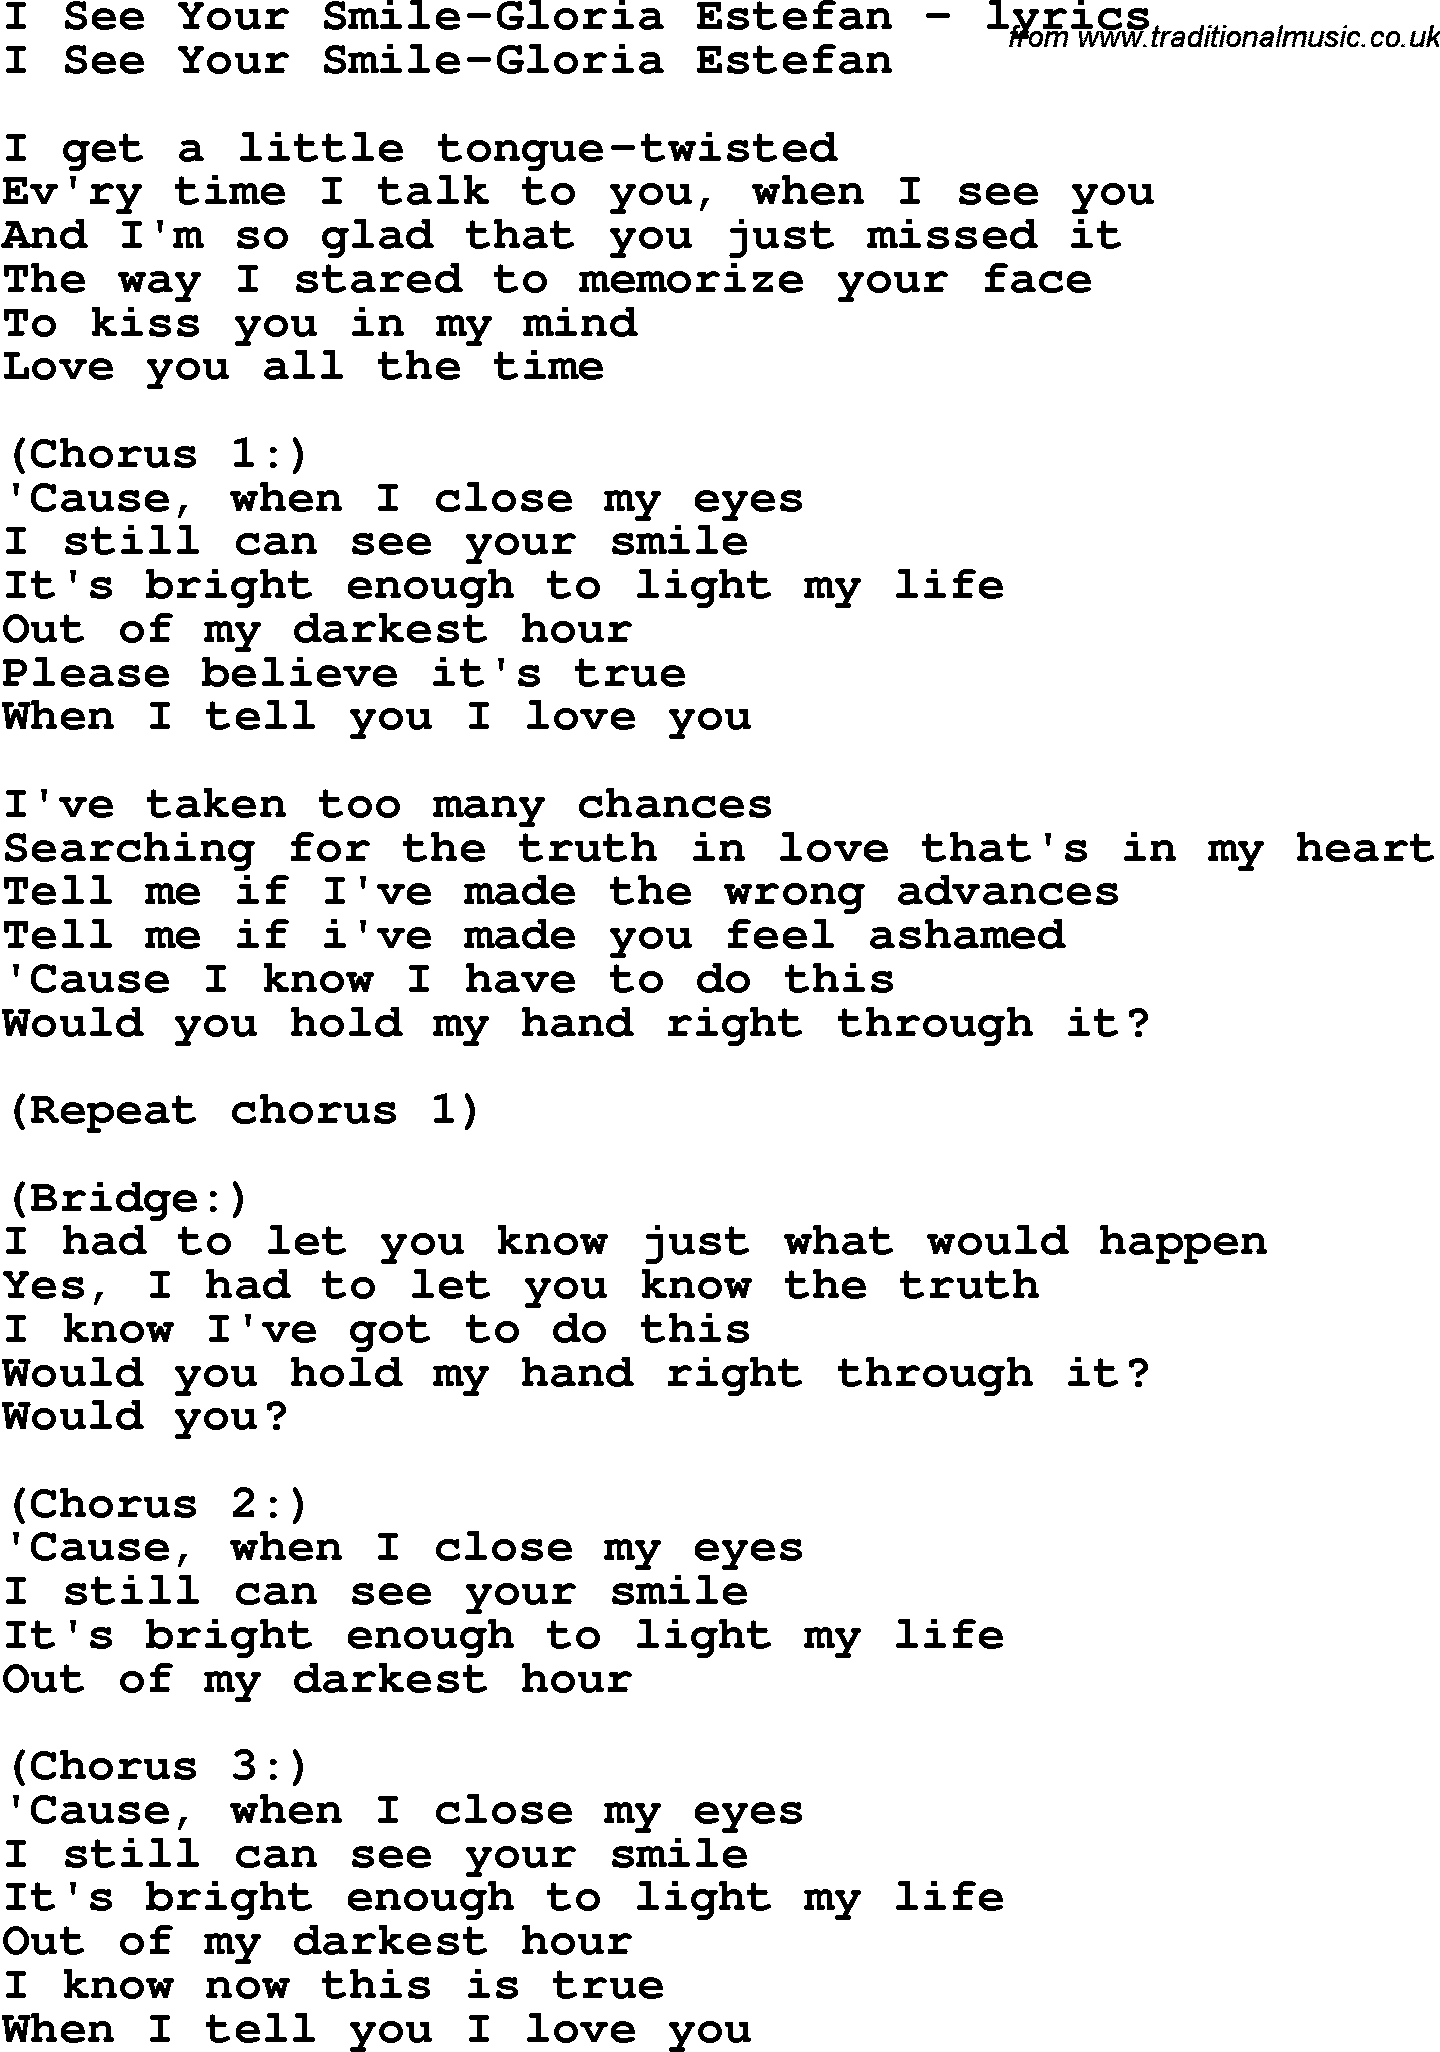 Love Song Lyrics for: I See Your Smile-Gloria Estefan